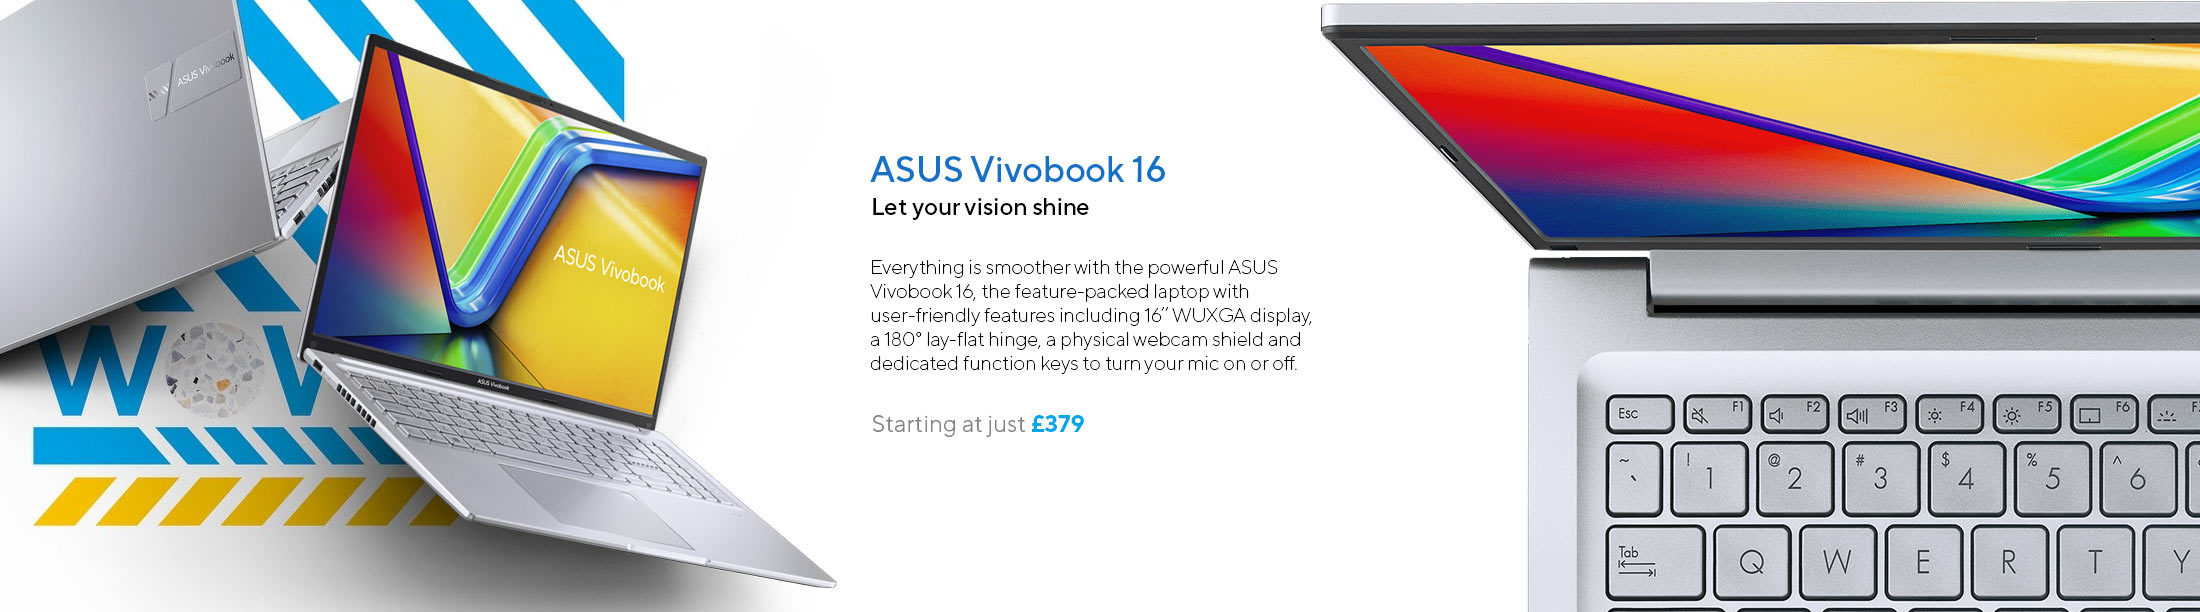 ASUS Vivobook 16 - let your vision shine